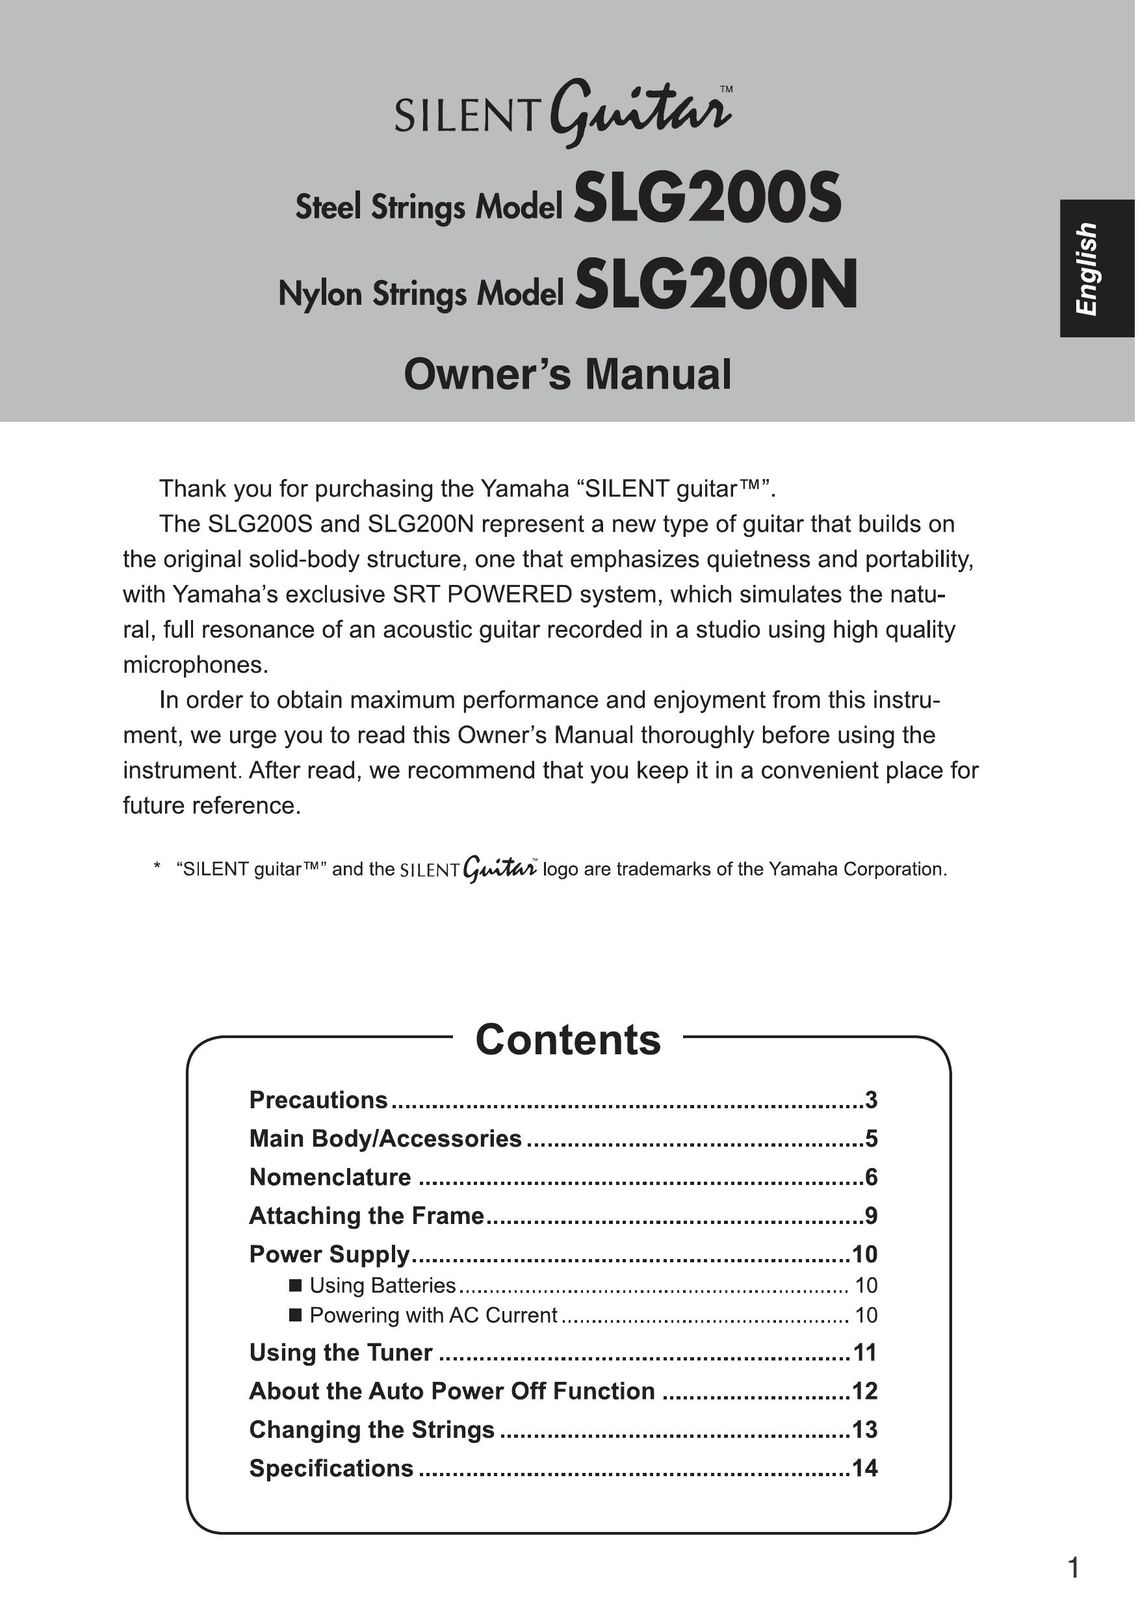 Yamaha SLG200N Musical Toy Instrument User Manual